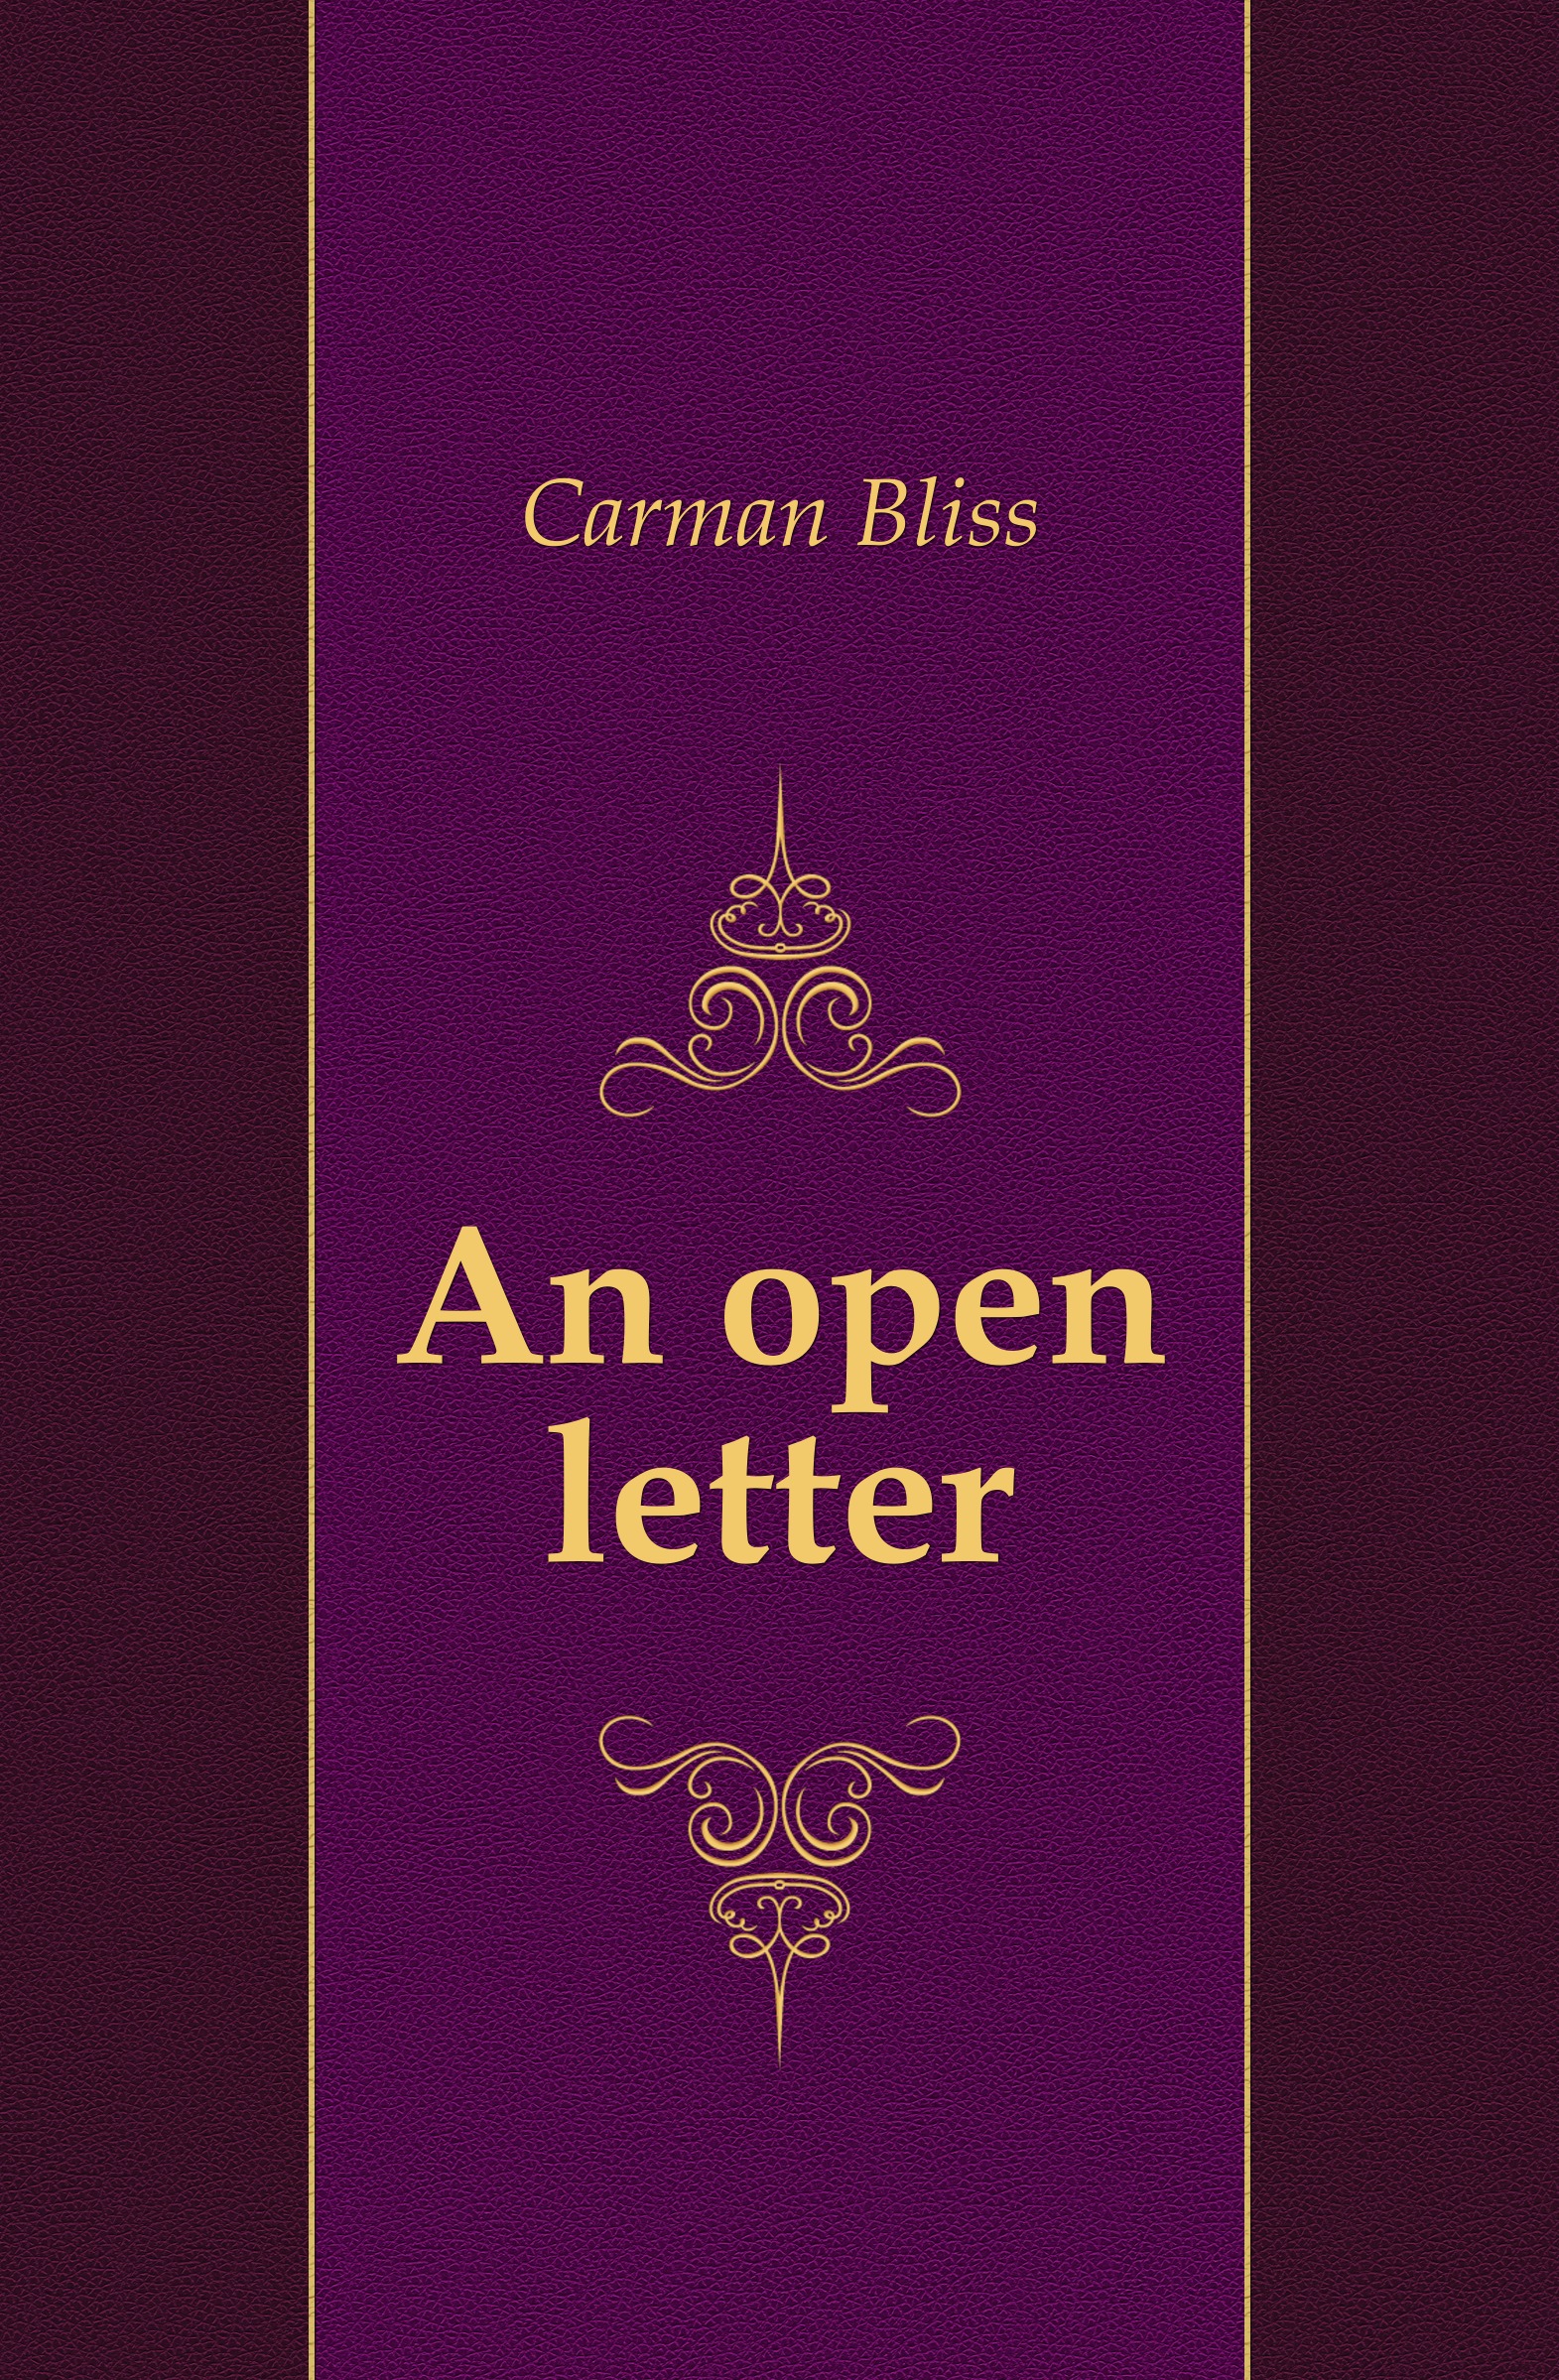 Carman Bliss An open letter